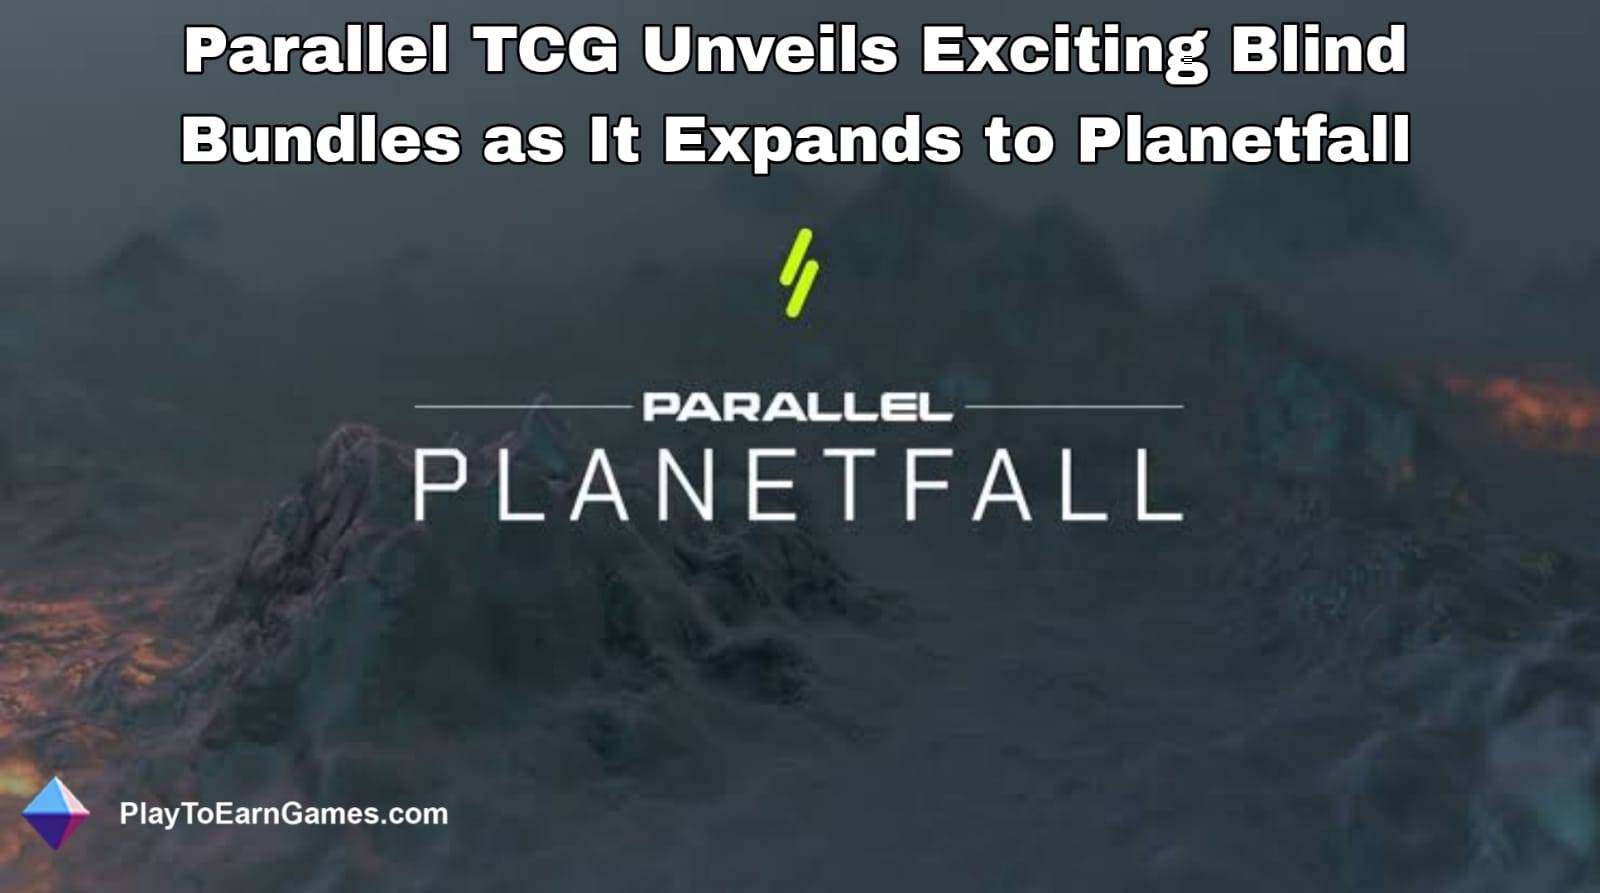 Parallel TCG enthüllt spannende Blind-Bundles, während es zu Planetfall expandiert